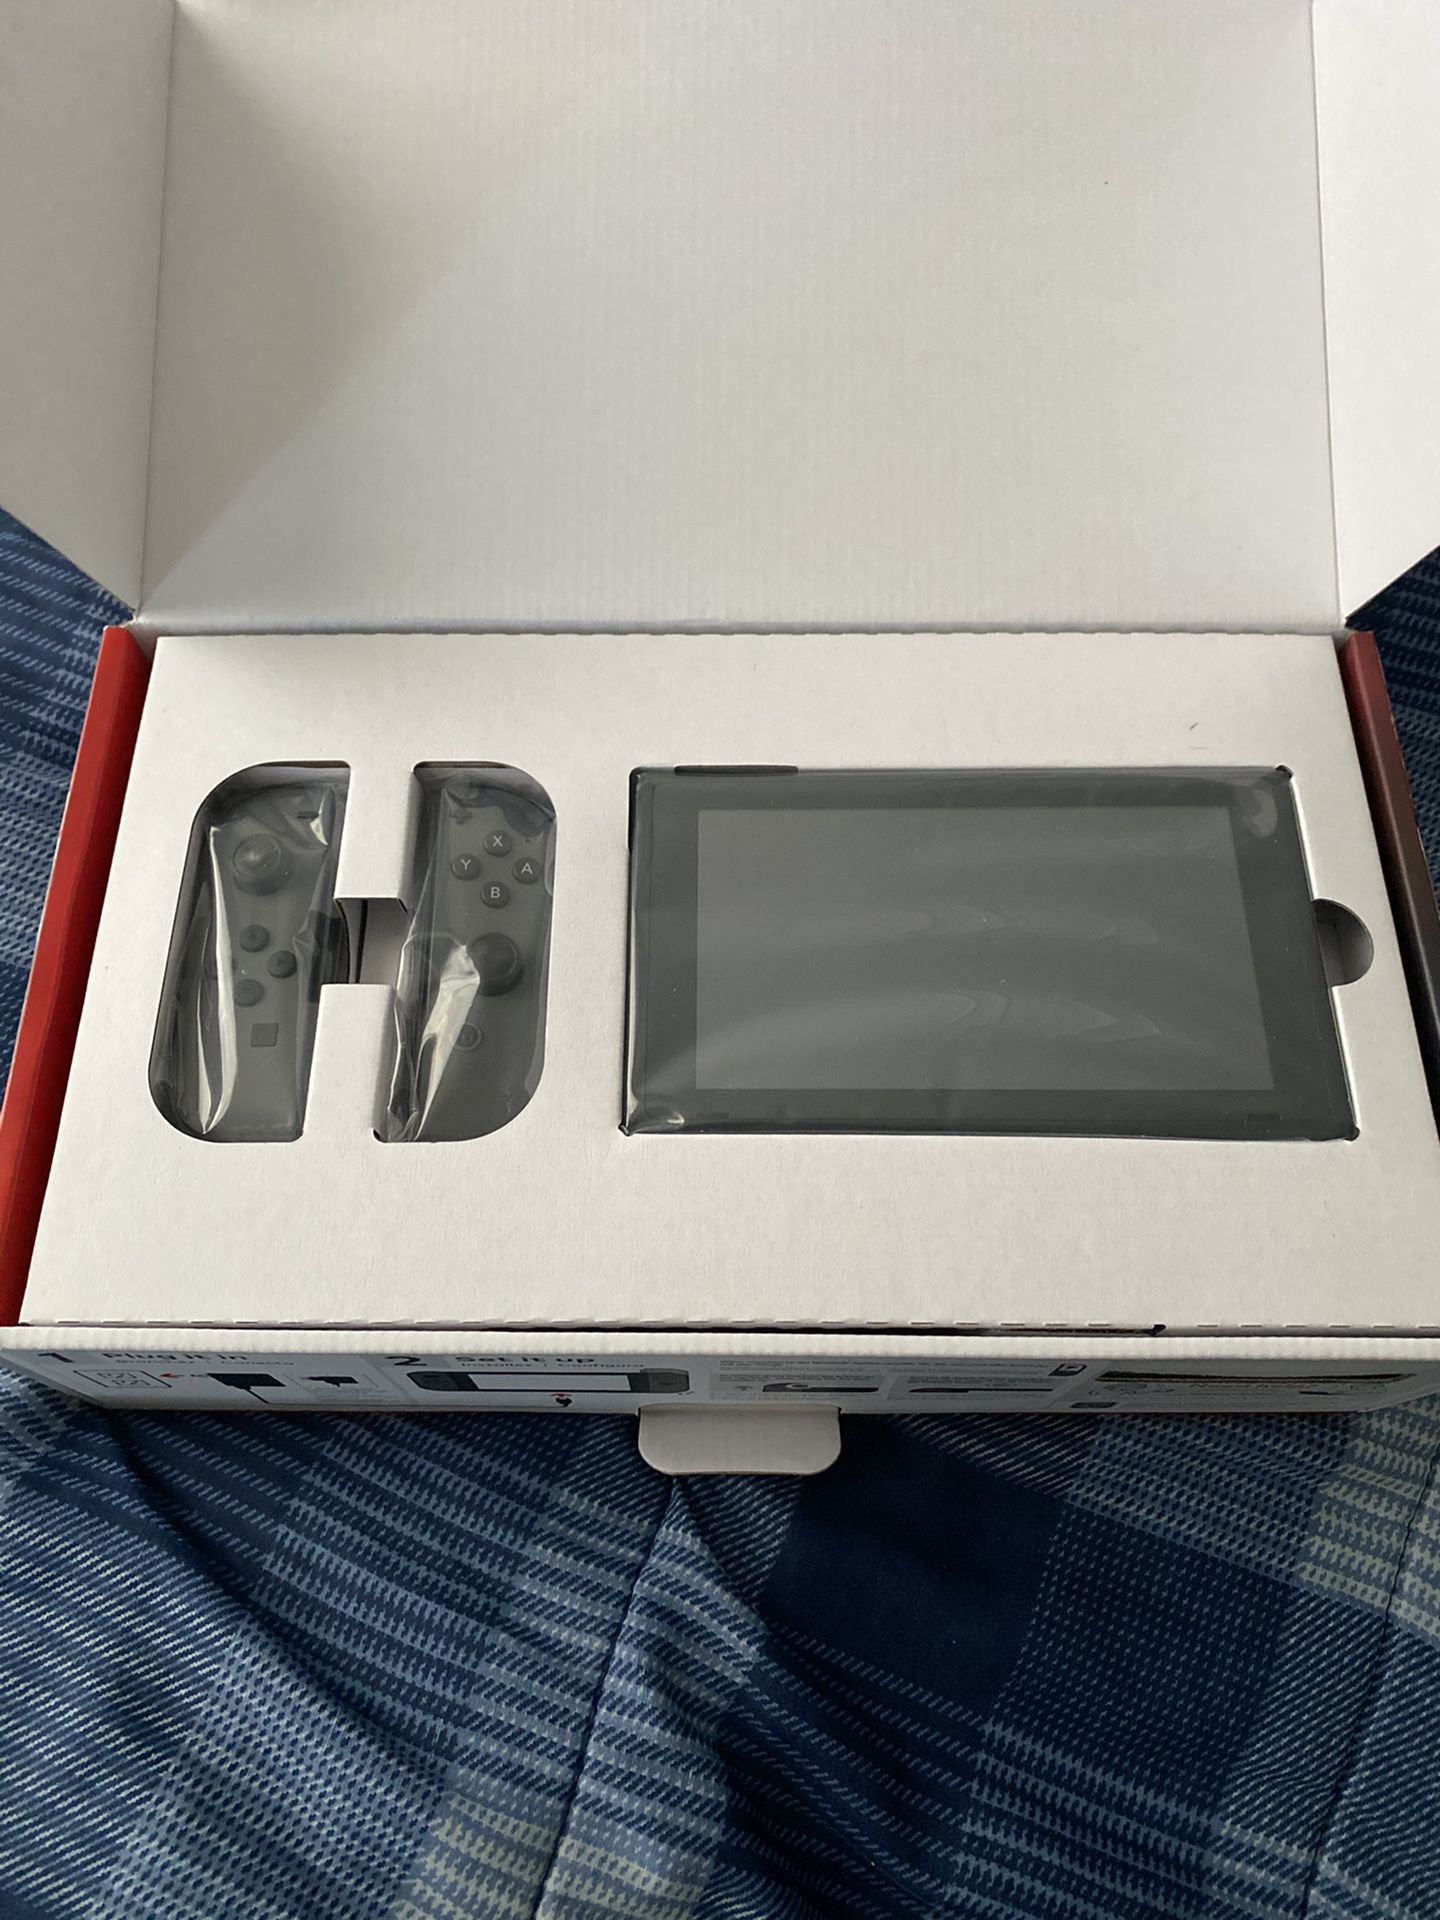 Nintendo Switch Gray